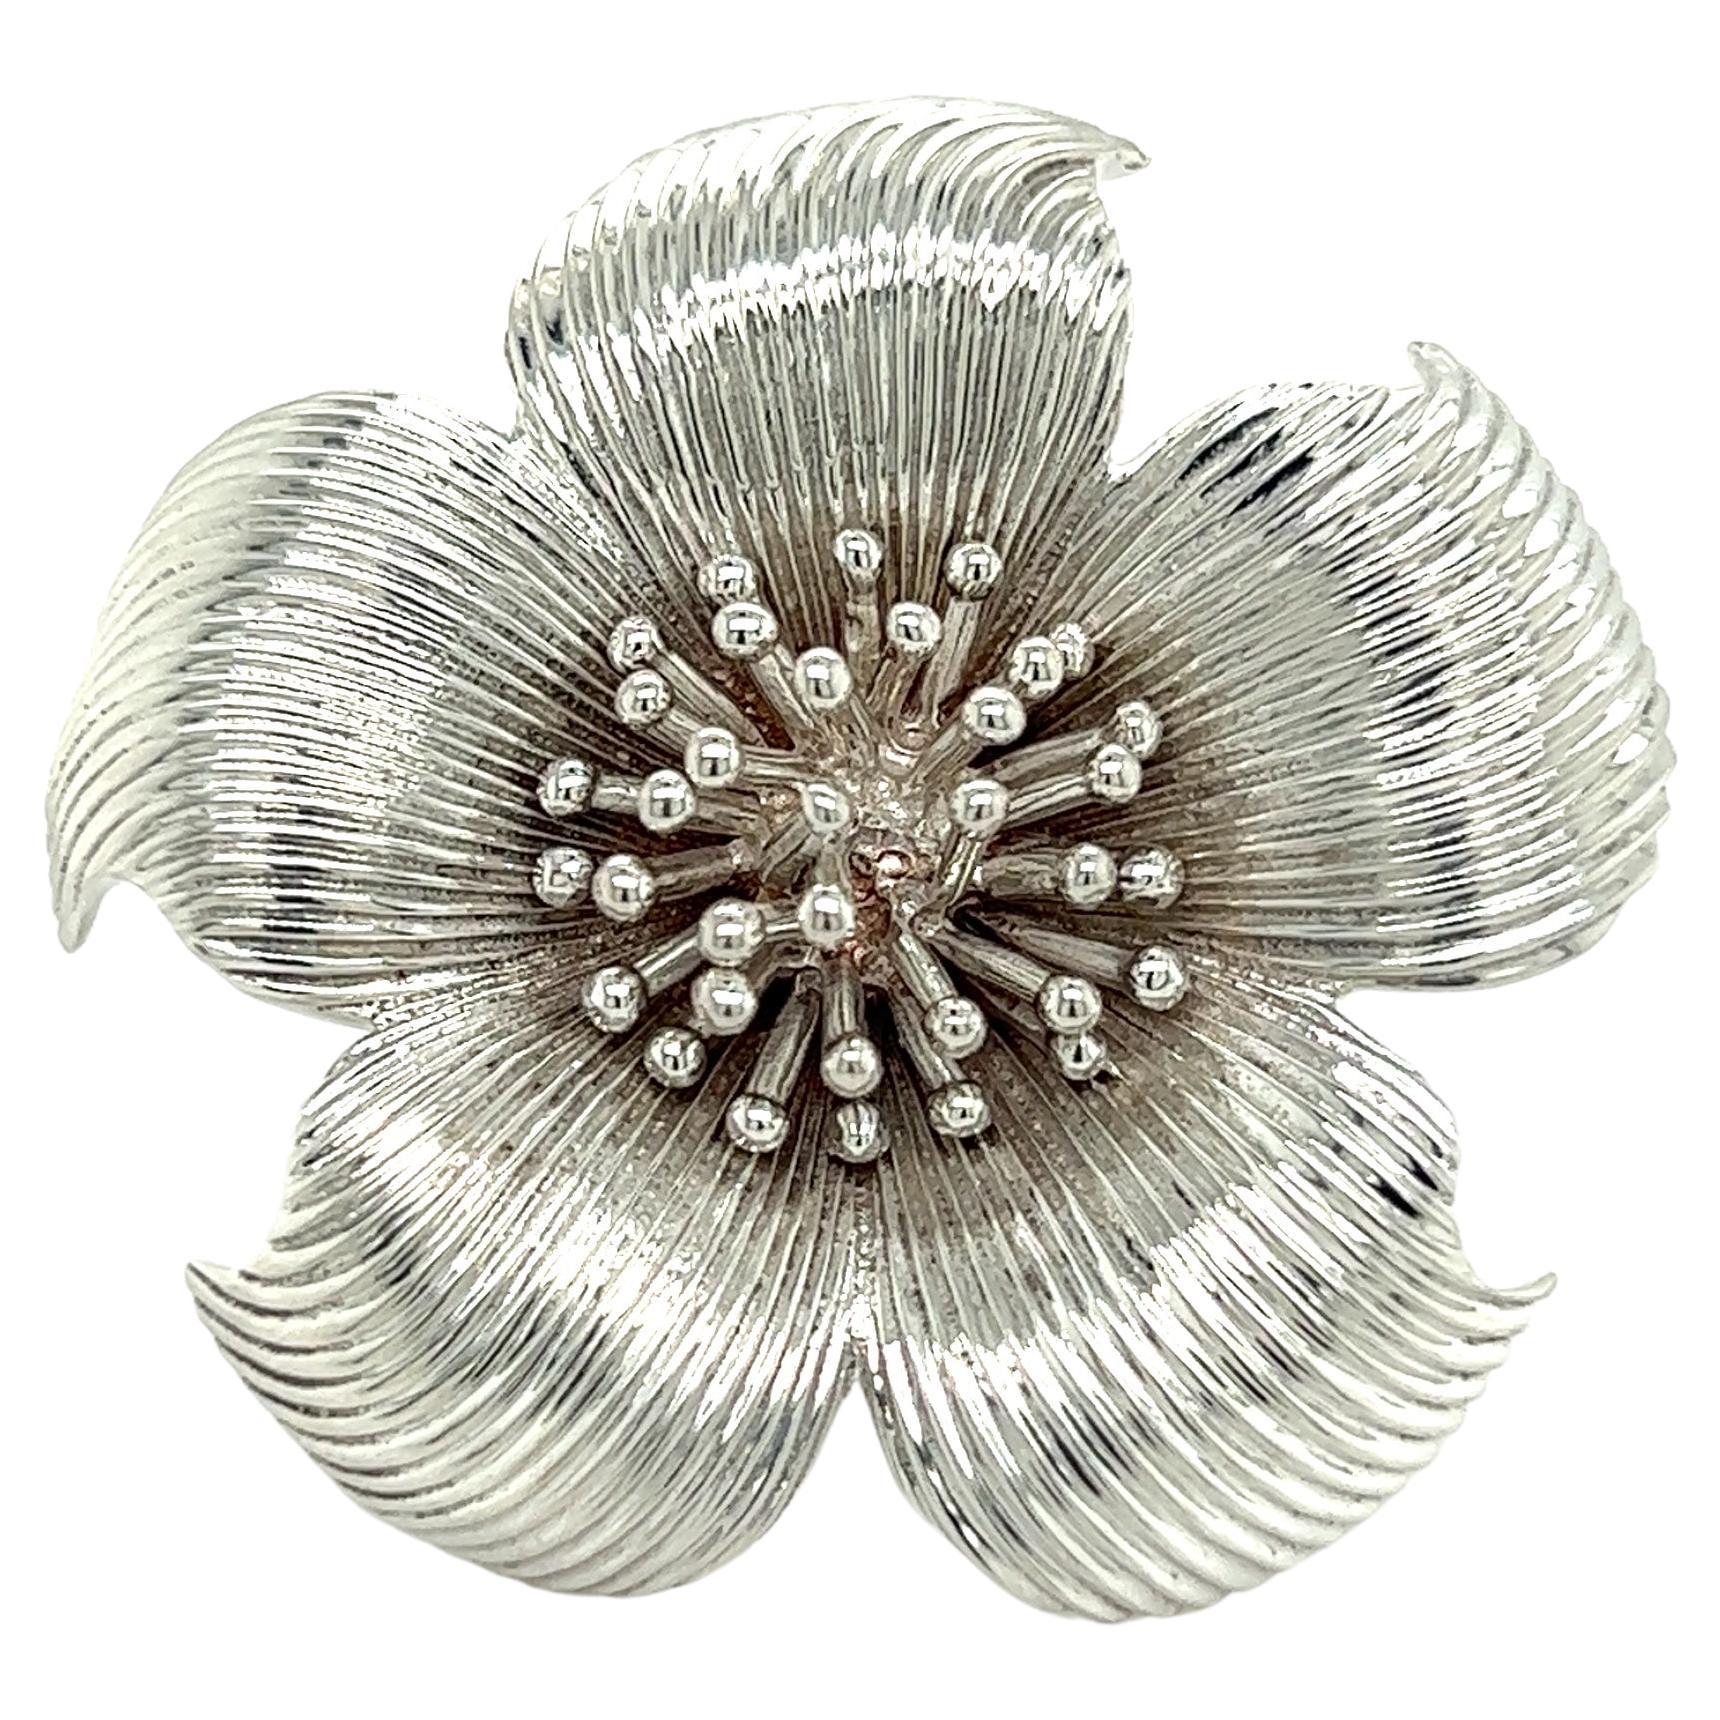 Tiffany & Co Estate Dagwood Flower brooch Pin Silver